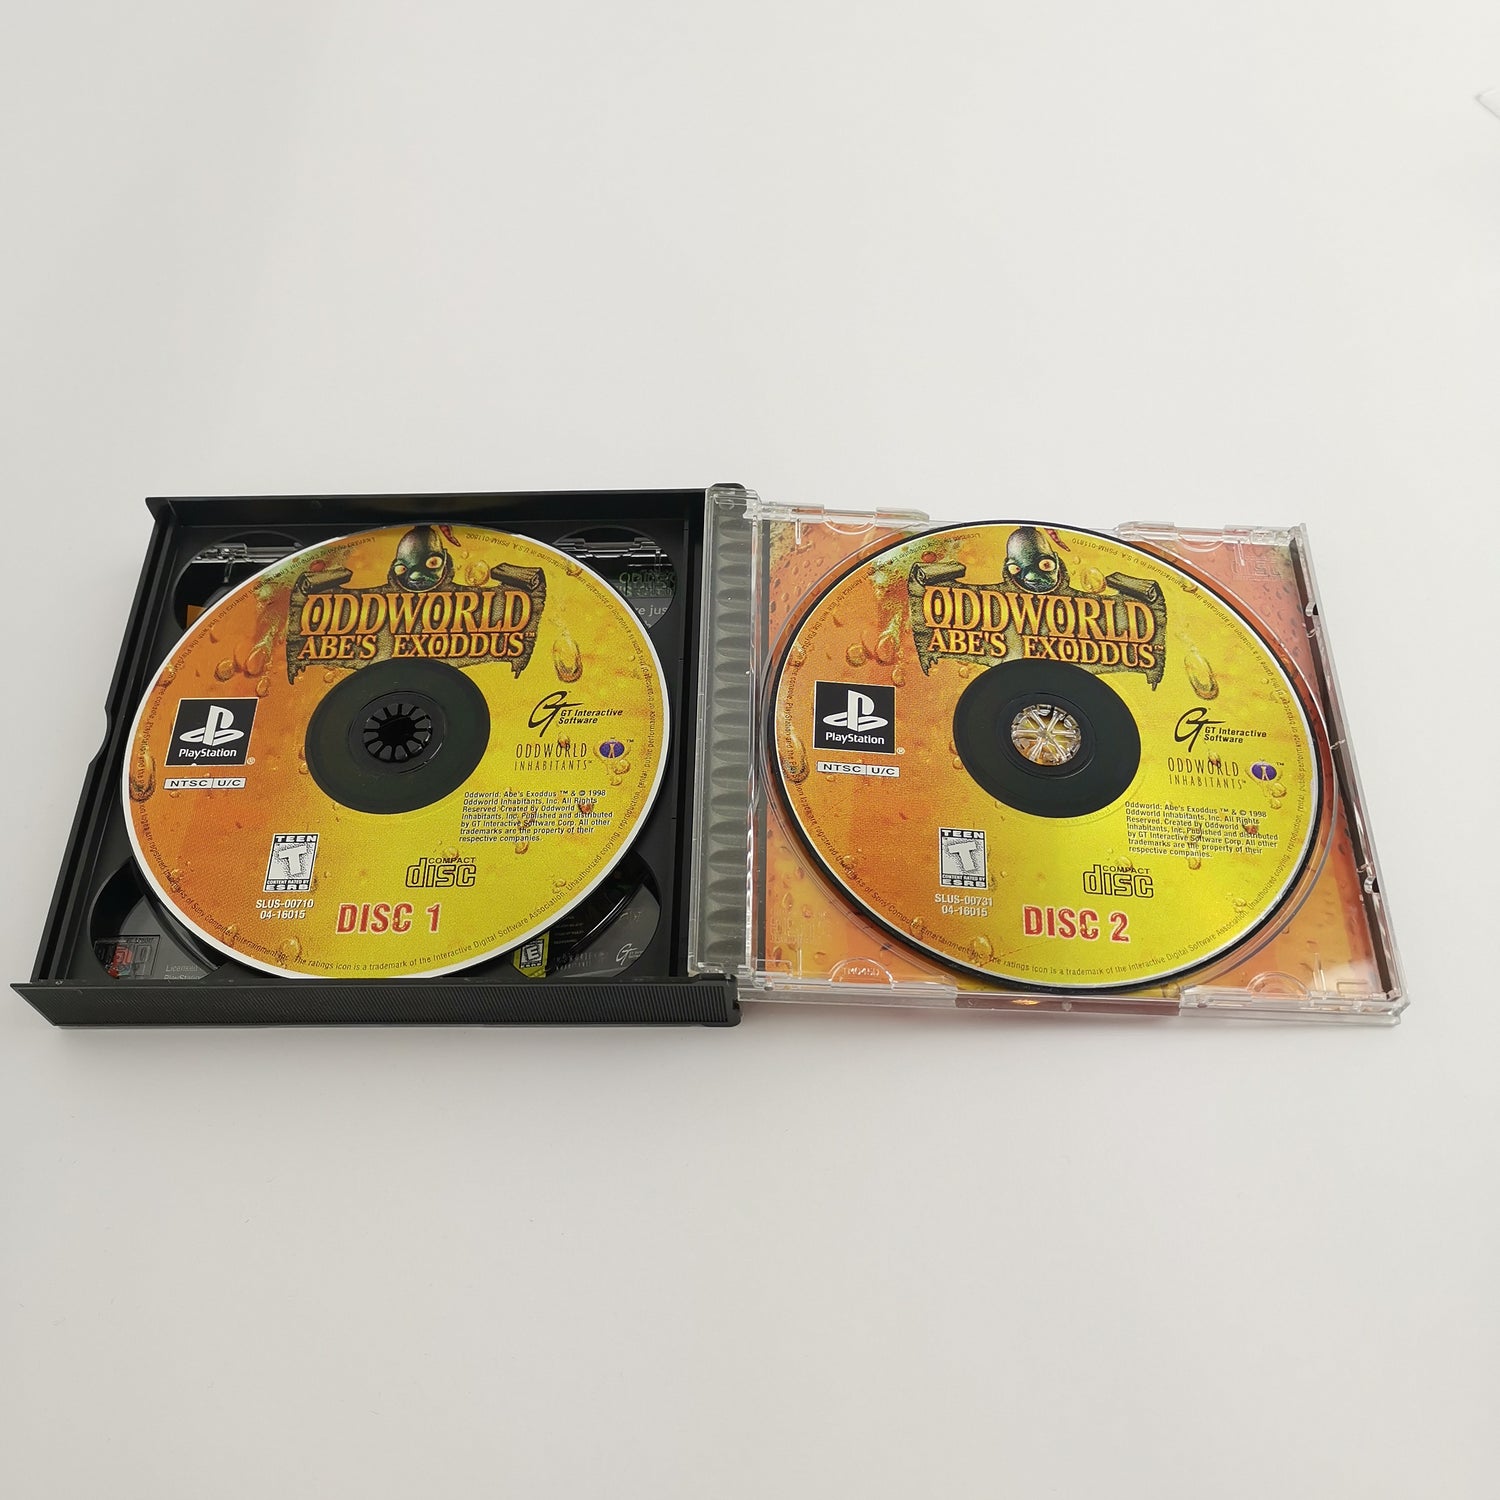 Sony Playstation 1 Game: Oddworld Abe's Exodus | PS1 PSX - OVP NTSC-U/C USA